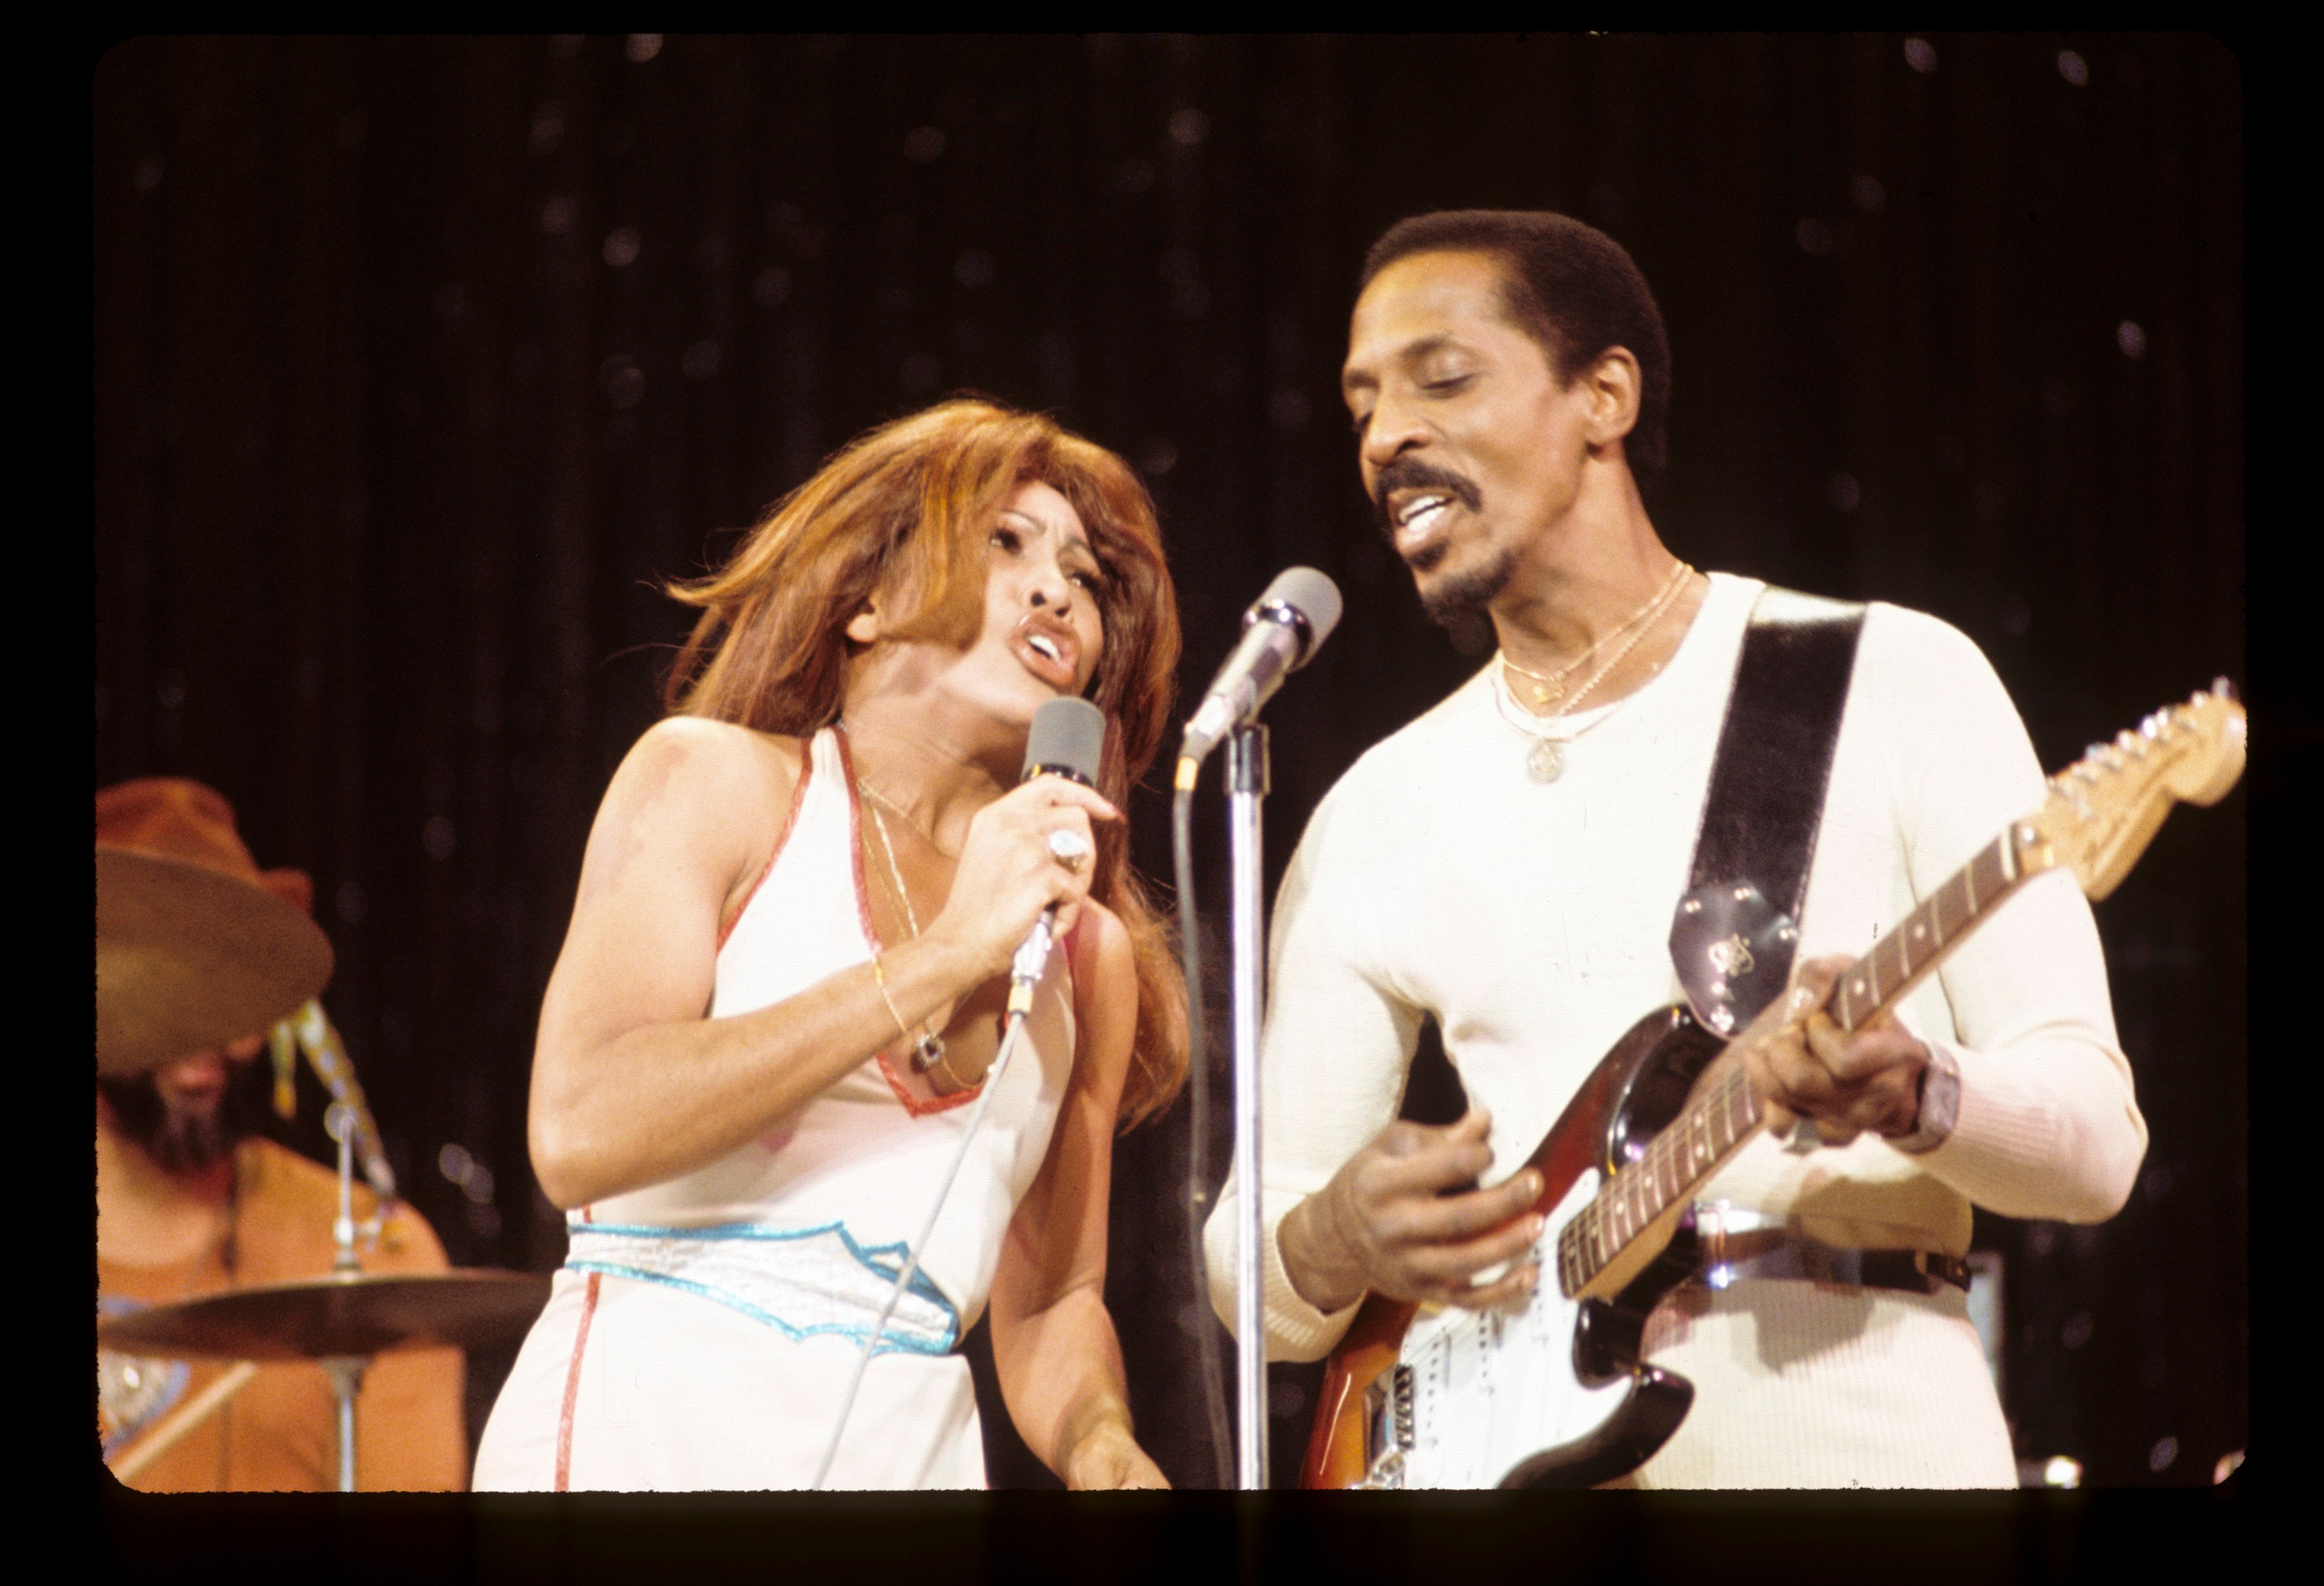 Tina Turner sings while Ike Turner plays guitar